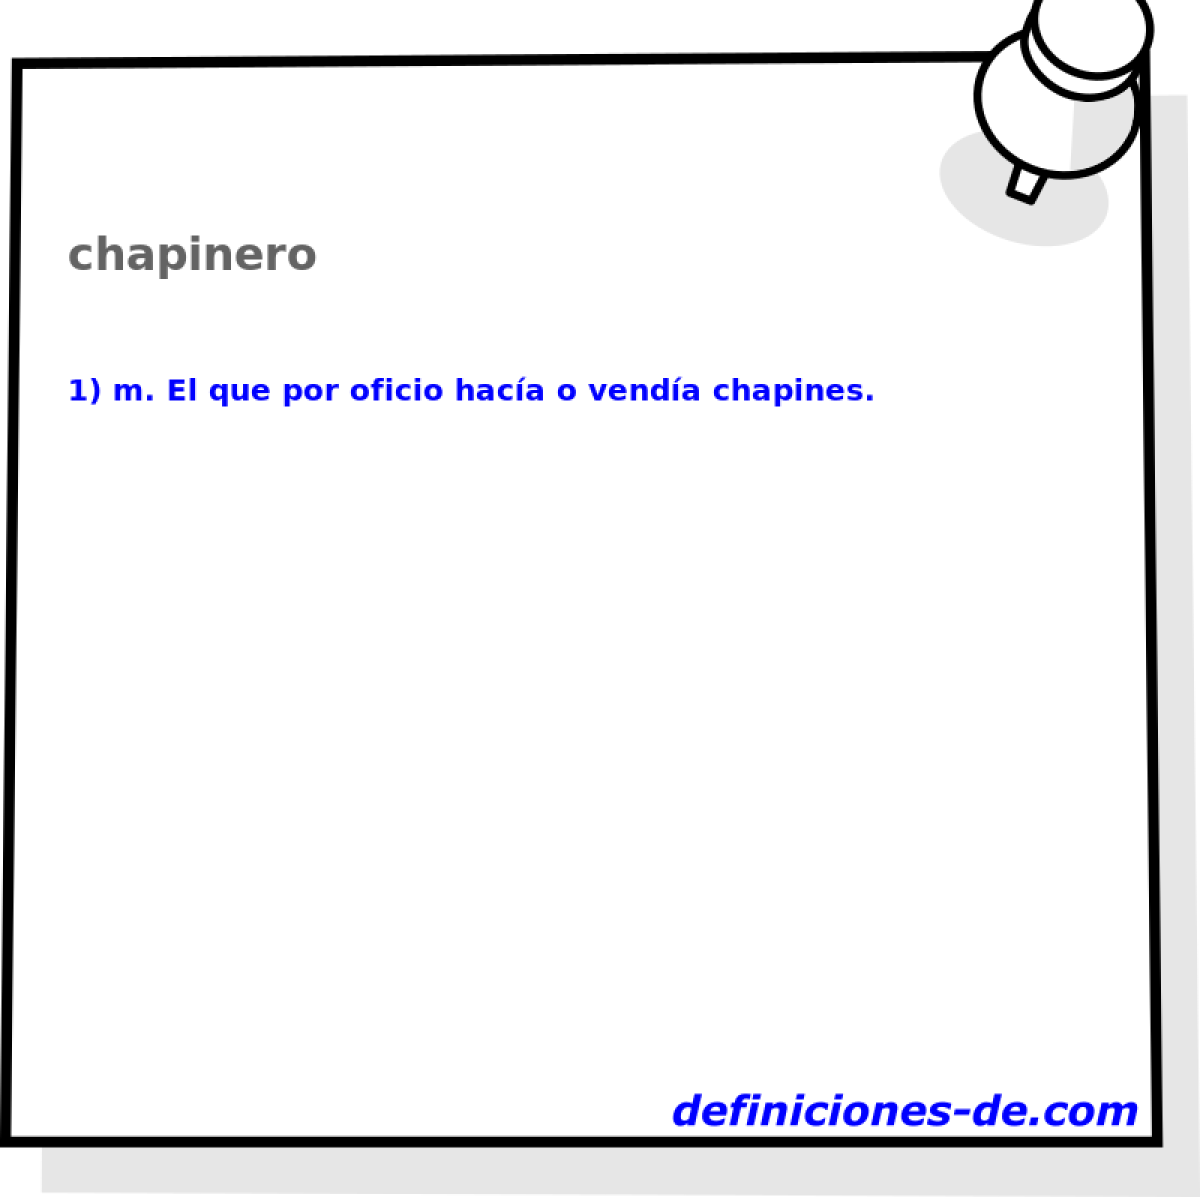 chapinero 